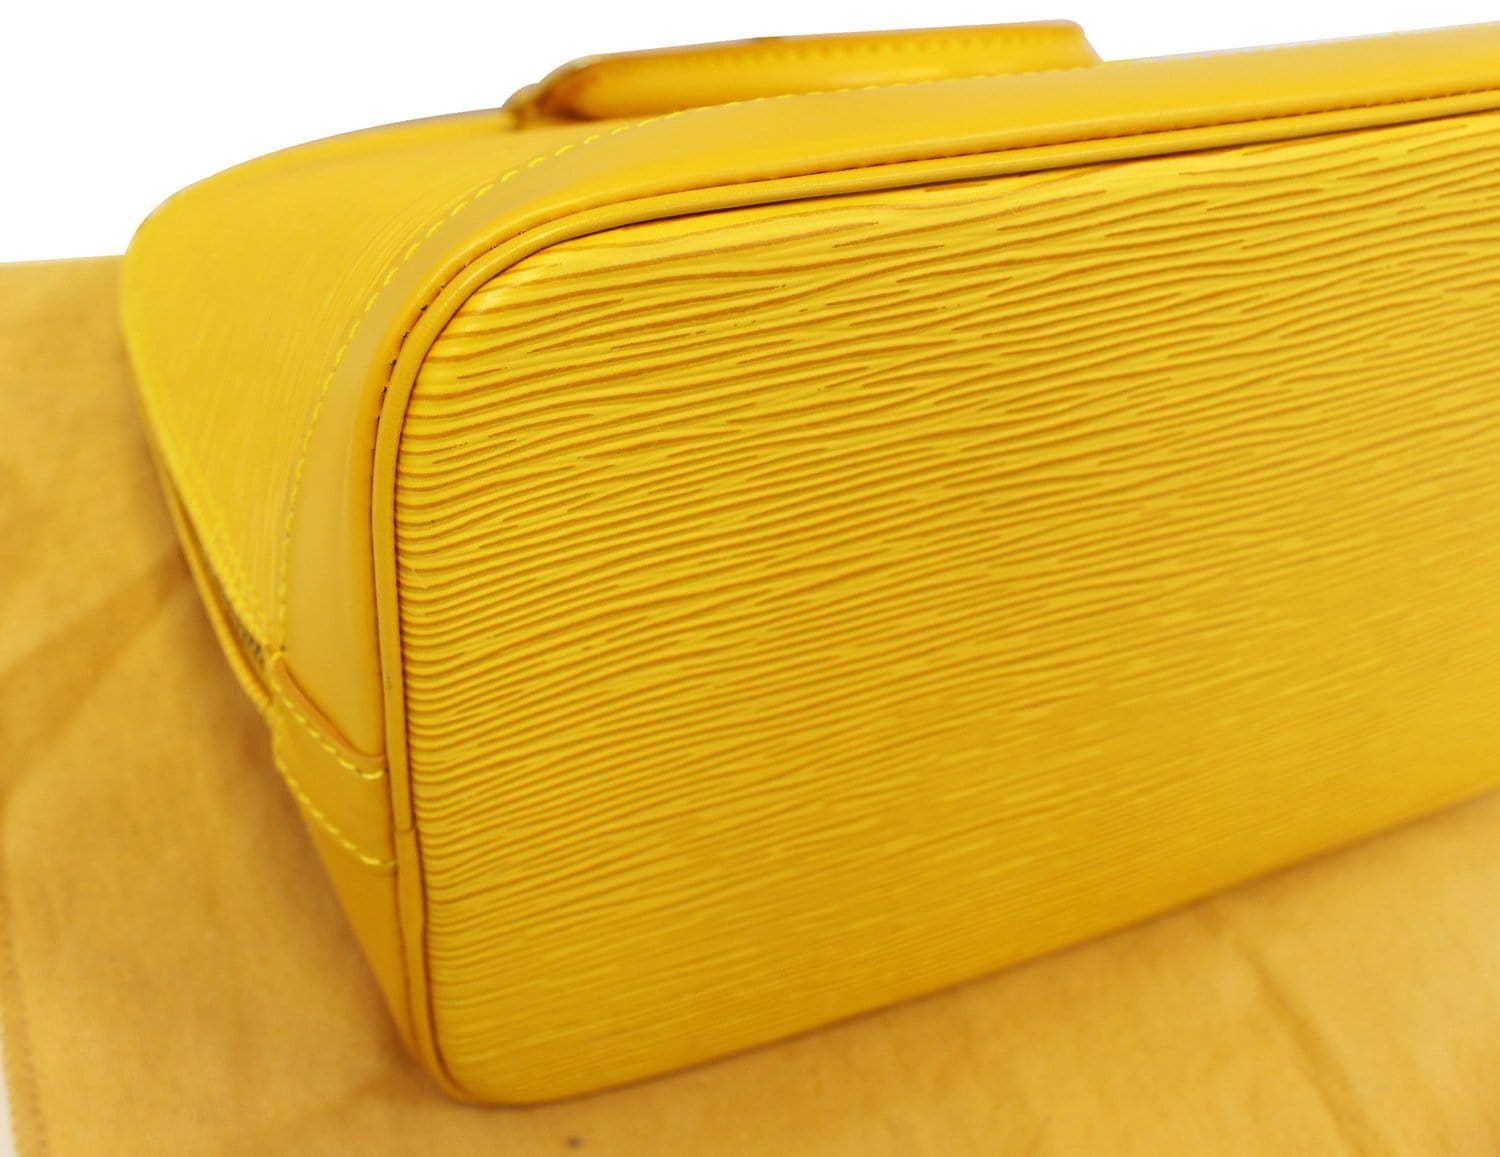 Louis Vuitton Alma PM Handbag Yellow EPI Leather Bag M52149